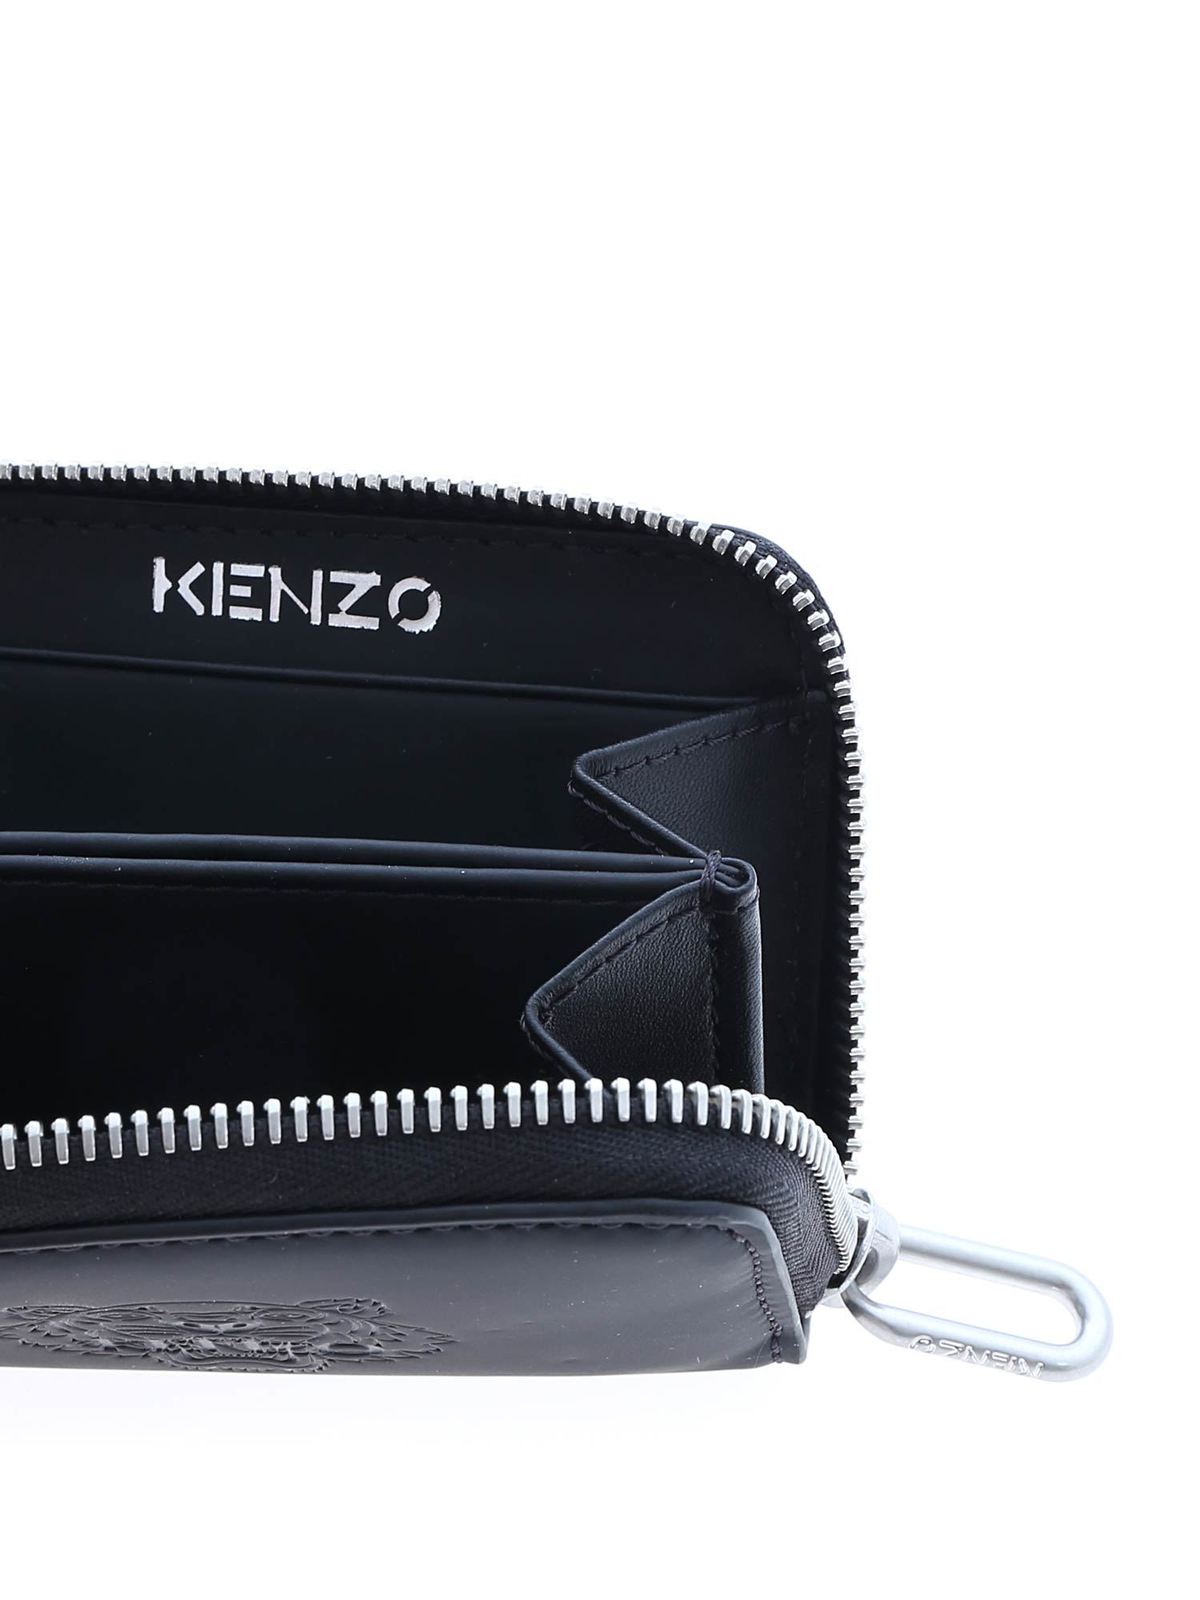 Kenzo - Tiger logo coin purse in black 